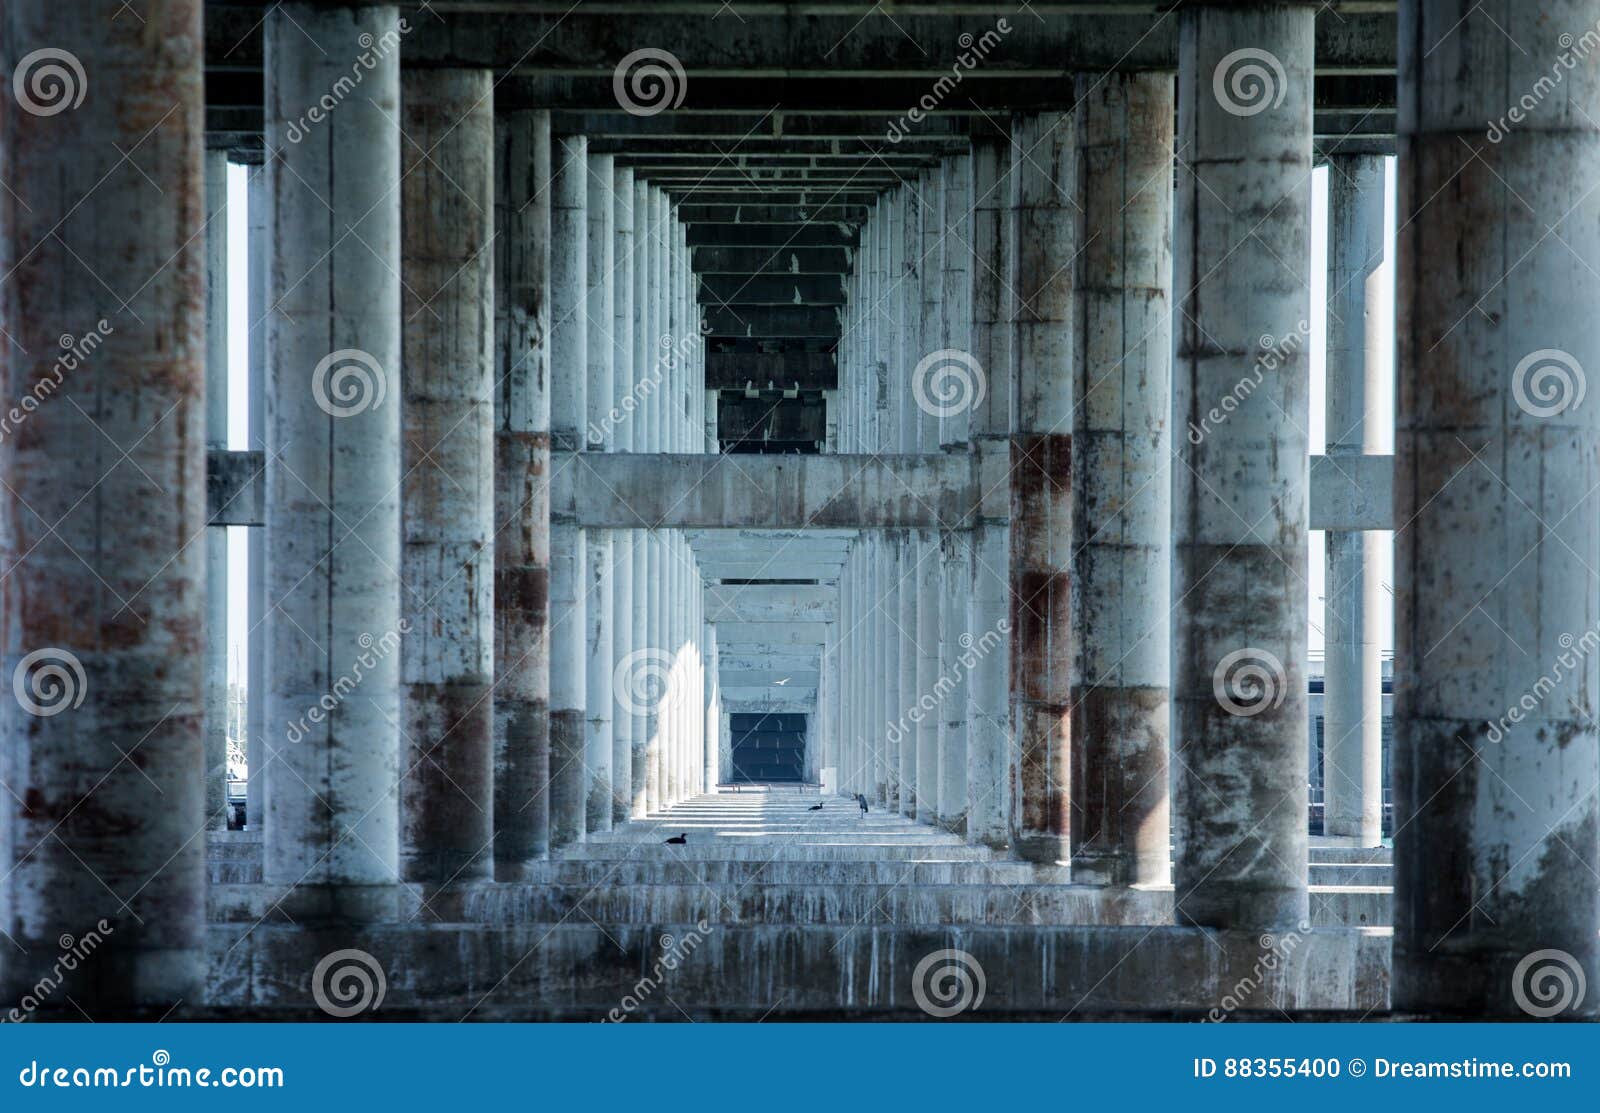 under the bridge in miami